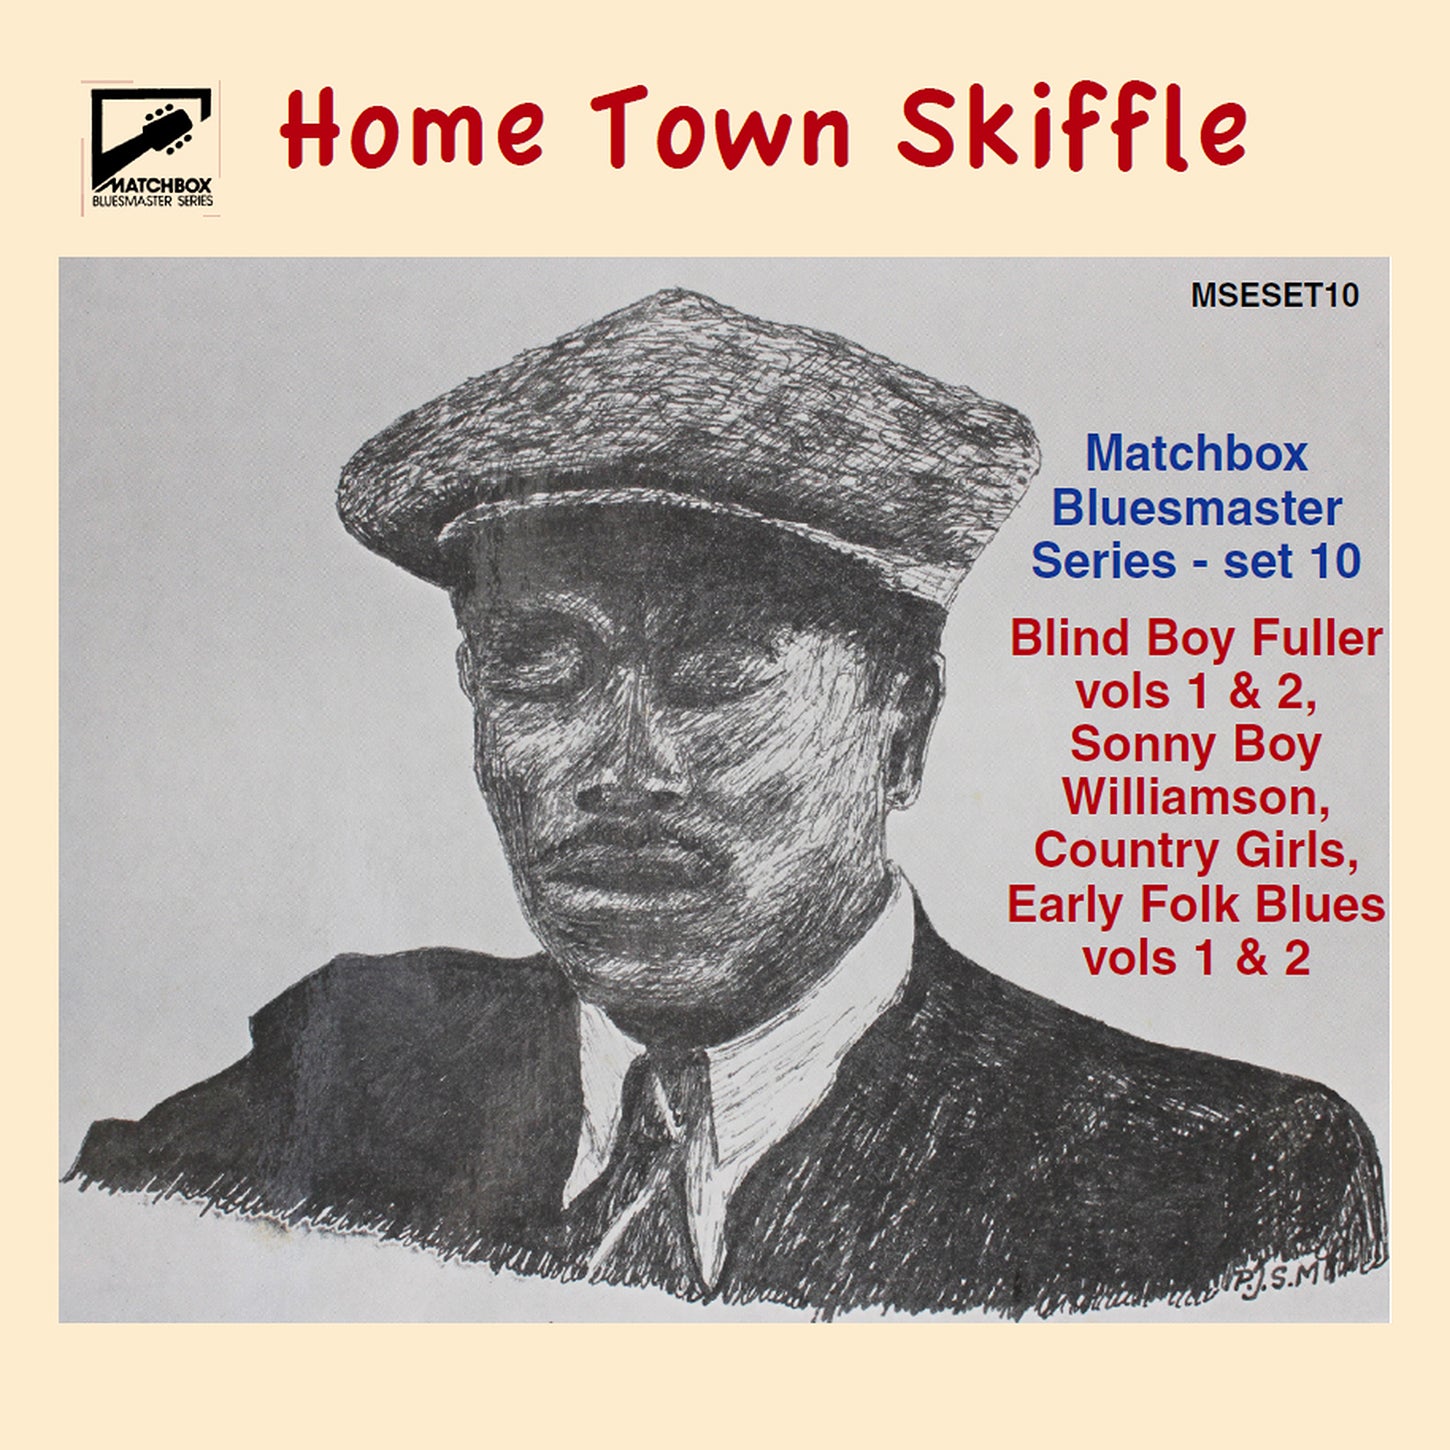 Matchbox Bluesmaster Series, Vol. 10 - Home Town Skiffle / Blind Boy Fuller et al.